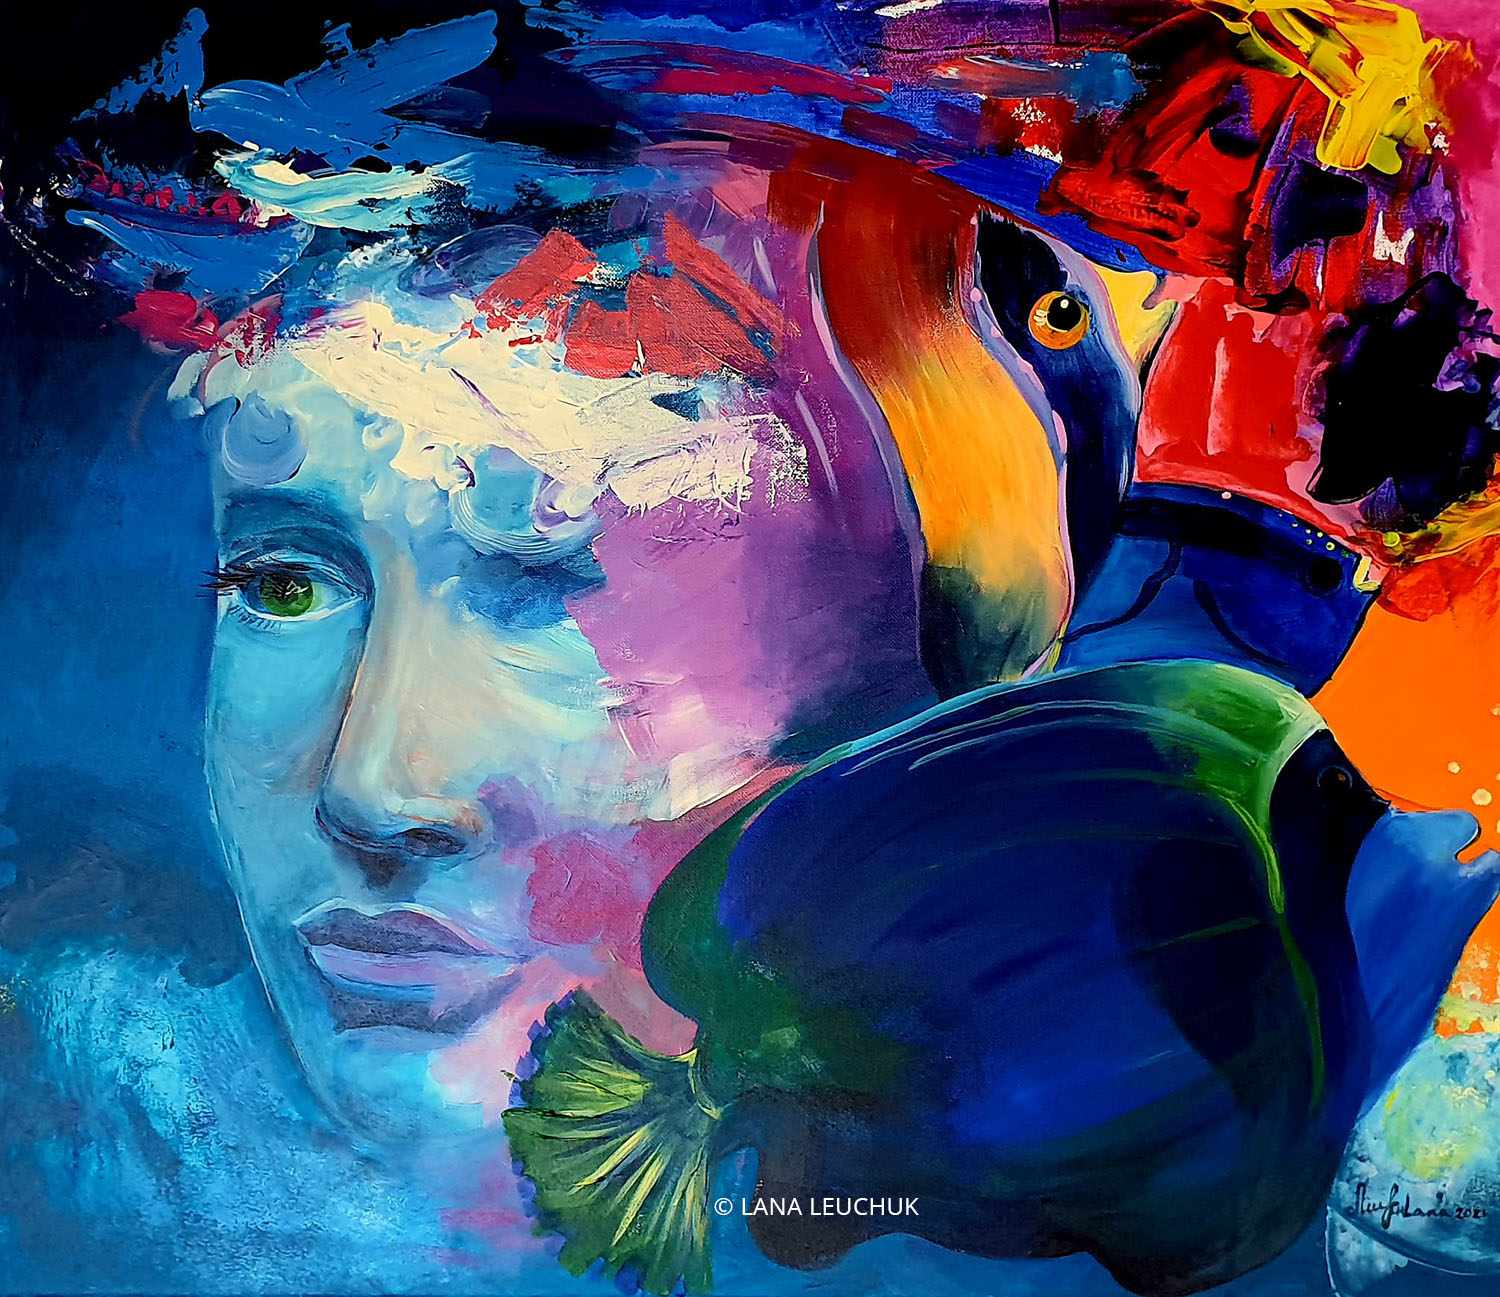 Lana-Leuchuk-So-Free-As-A-Fish-in-the-Sea-acrylic-painting-2021